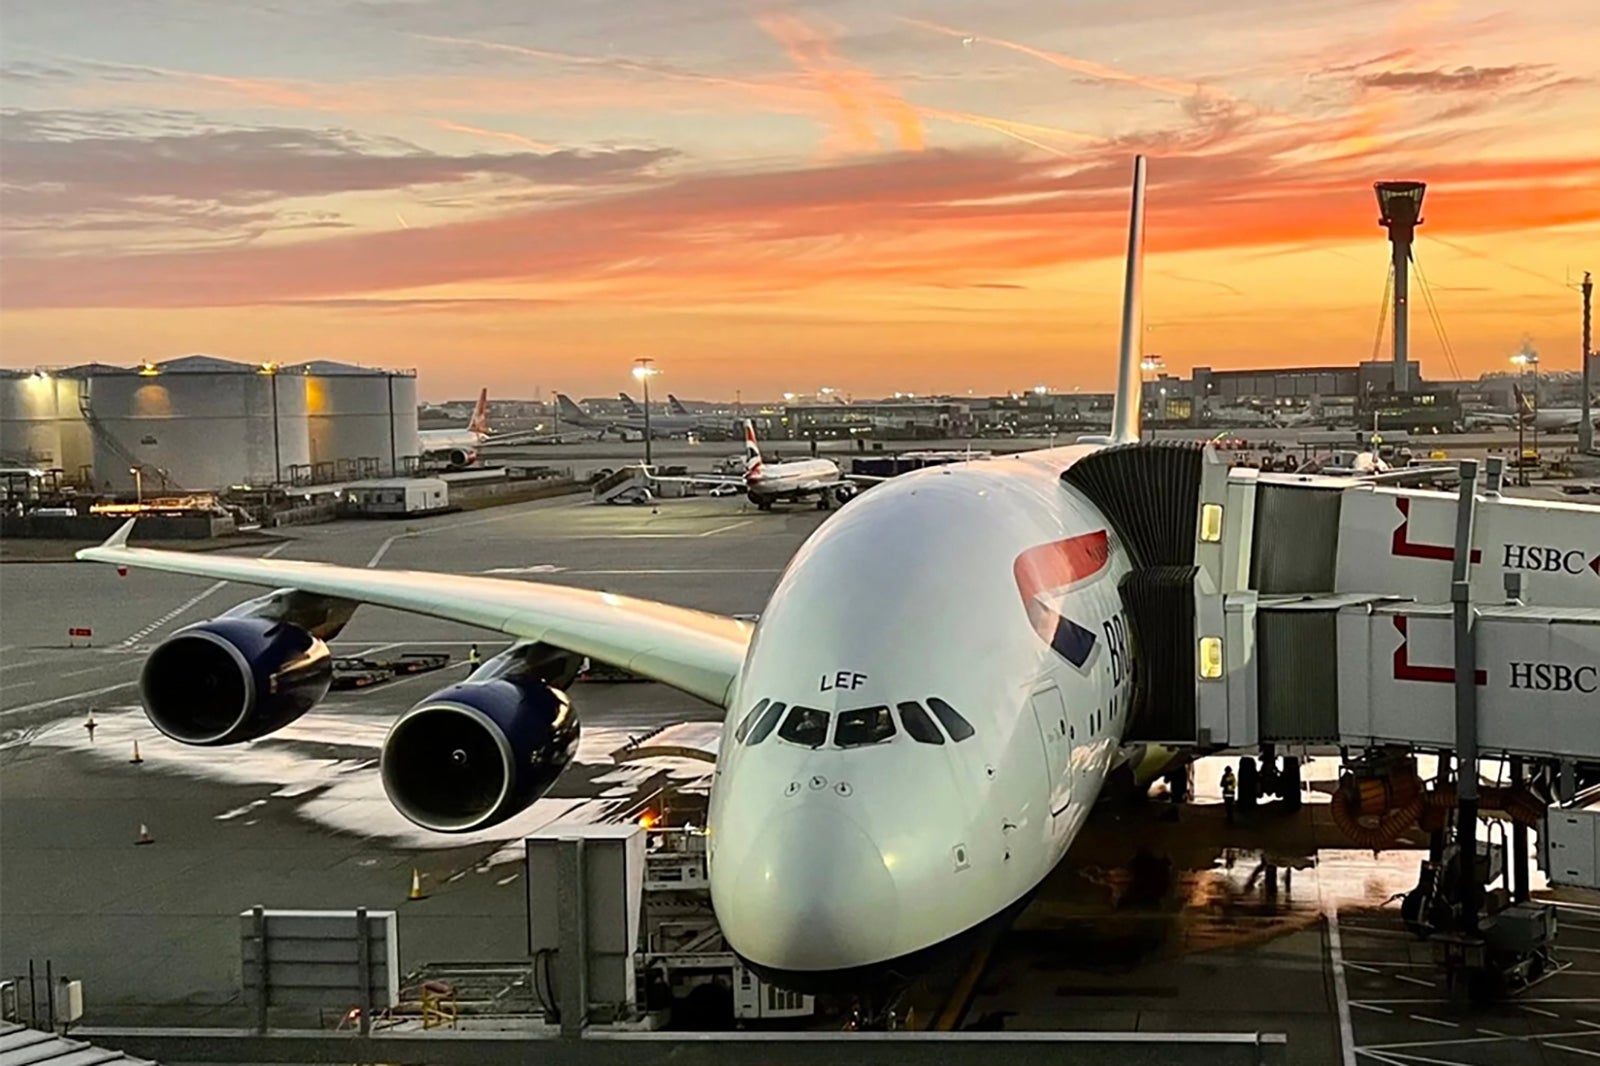 British Airways Airbus A380 at an airport gate